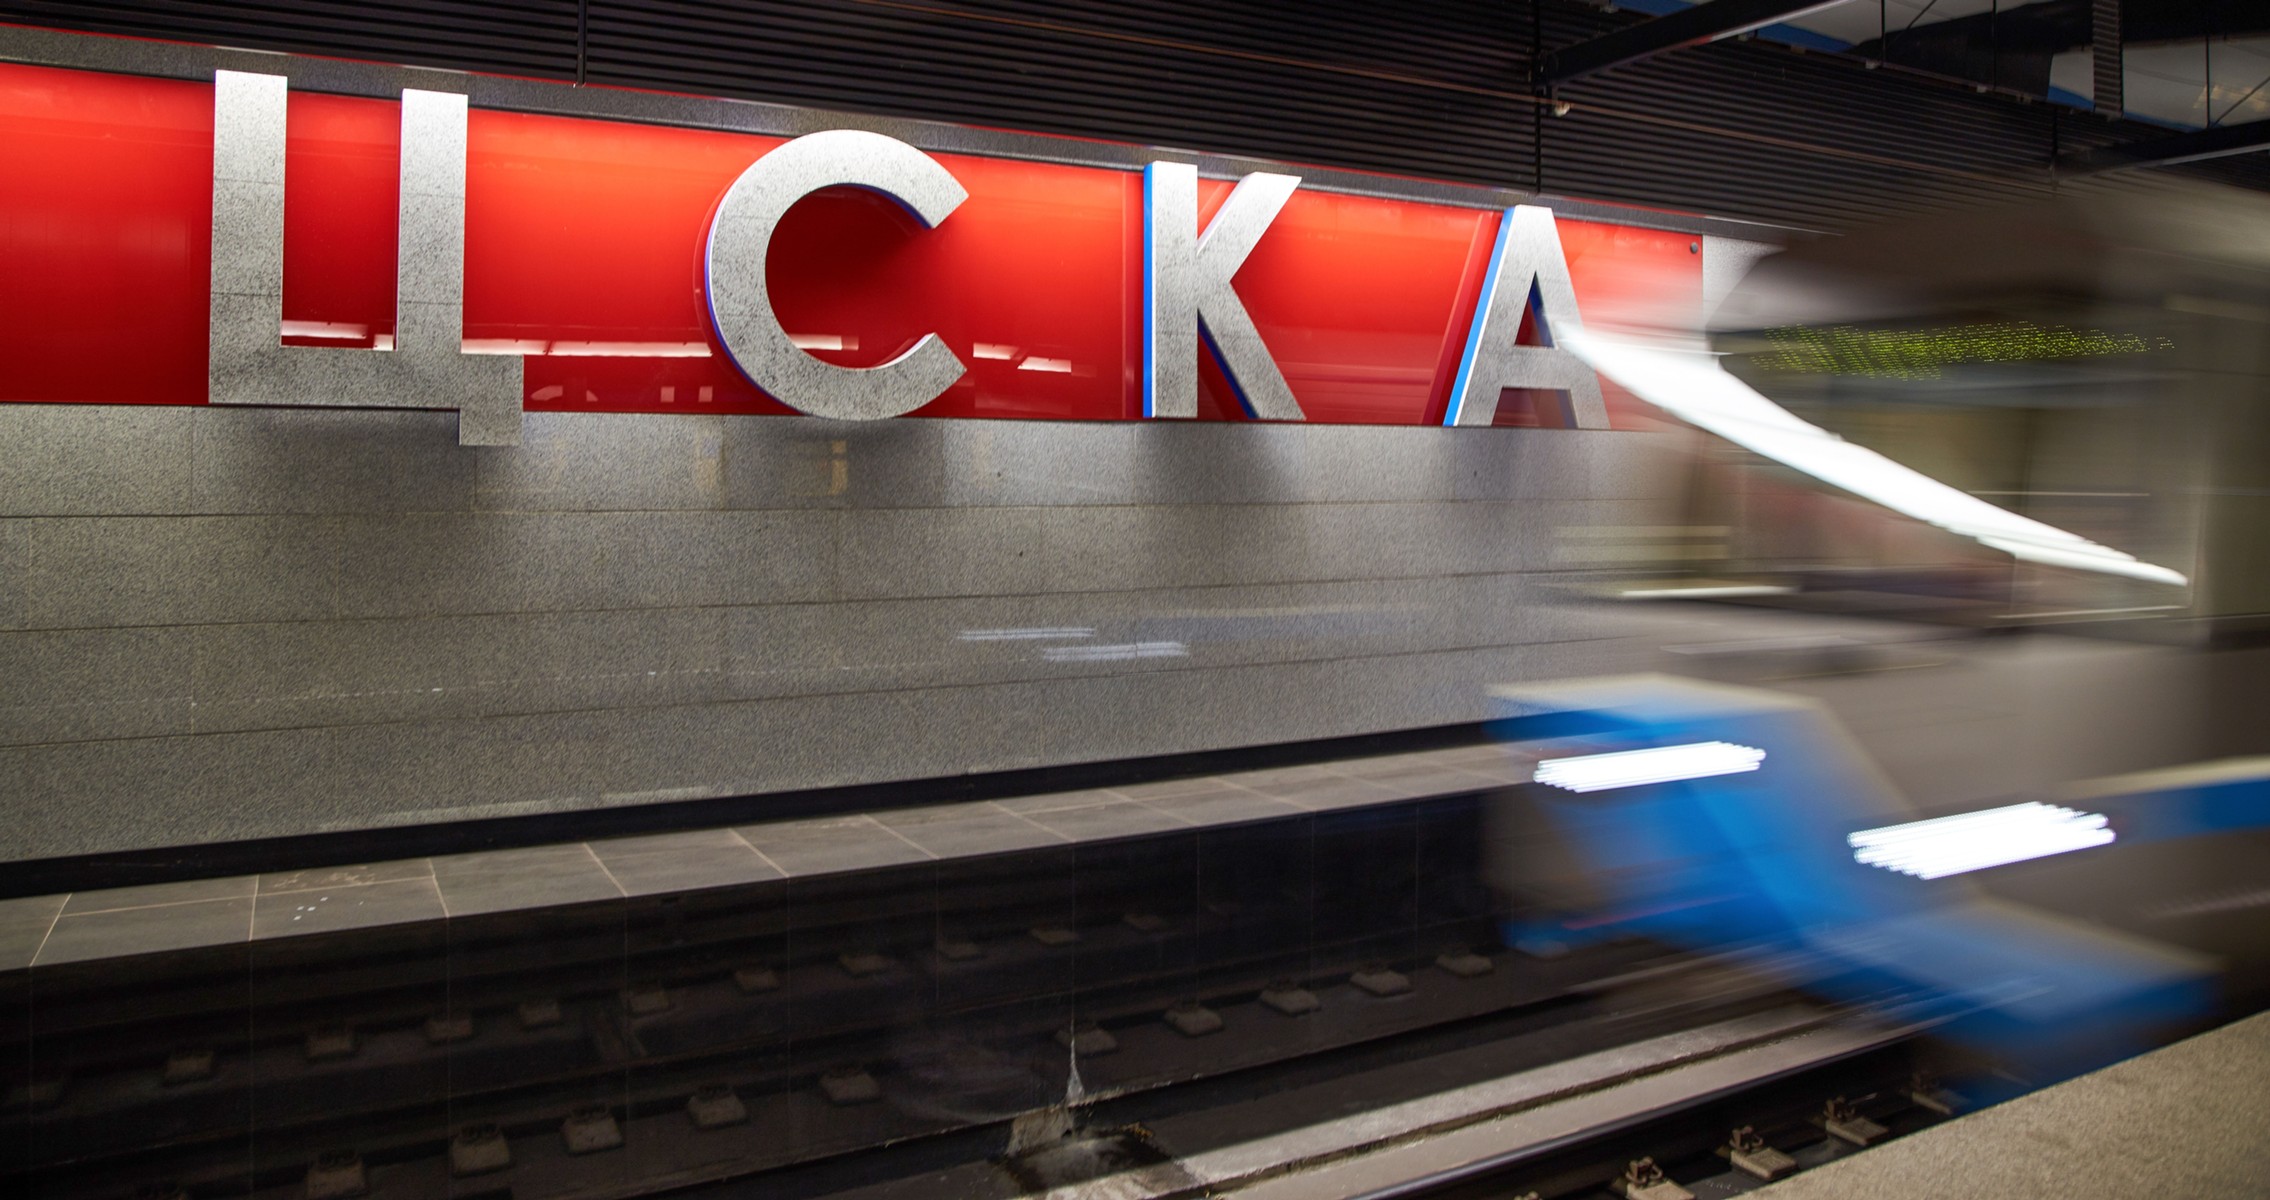 цска в москве метро